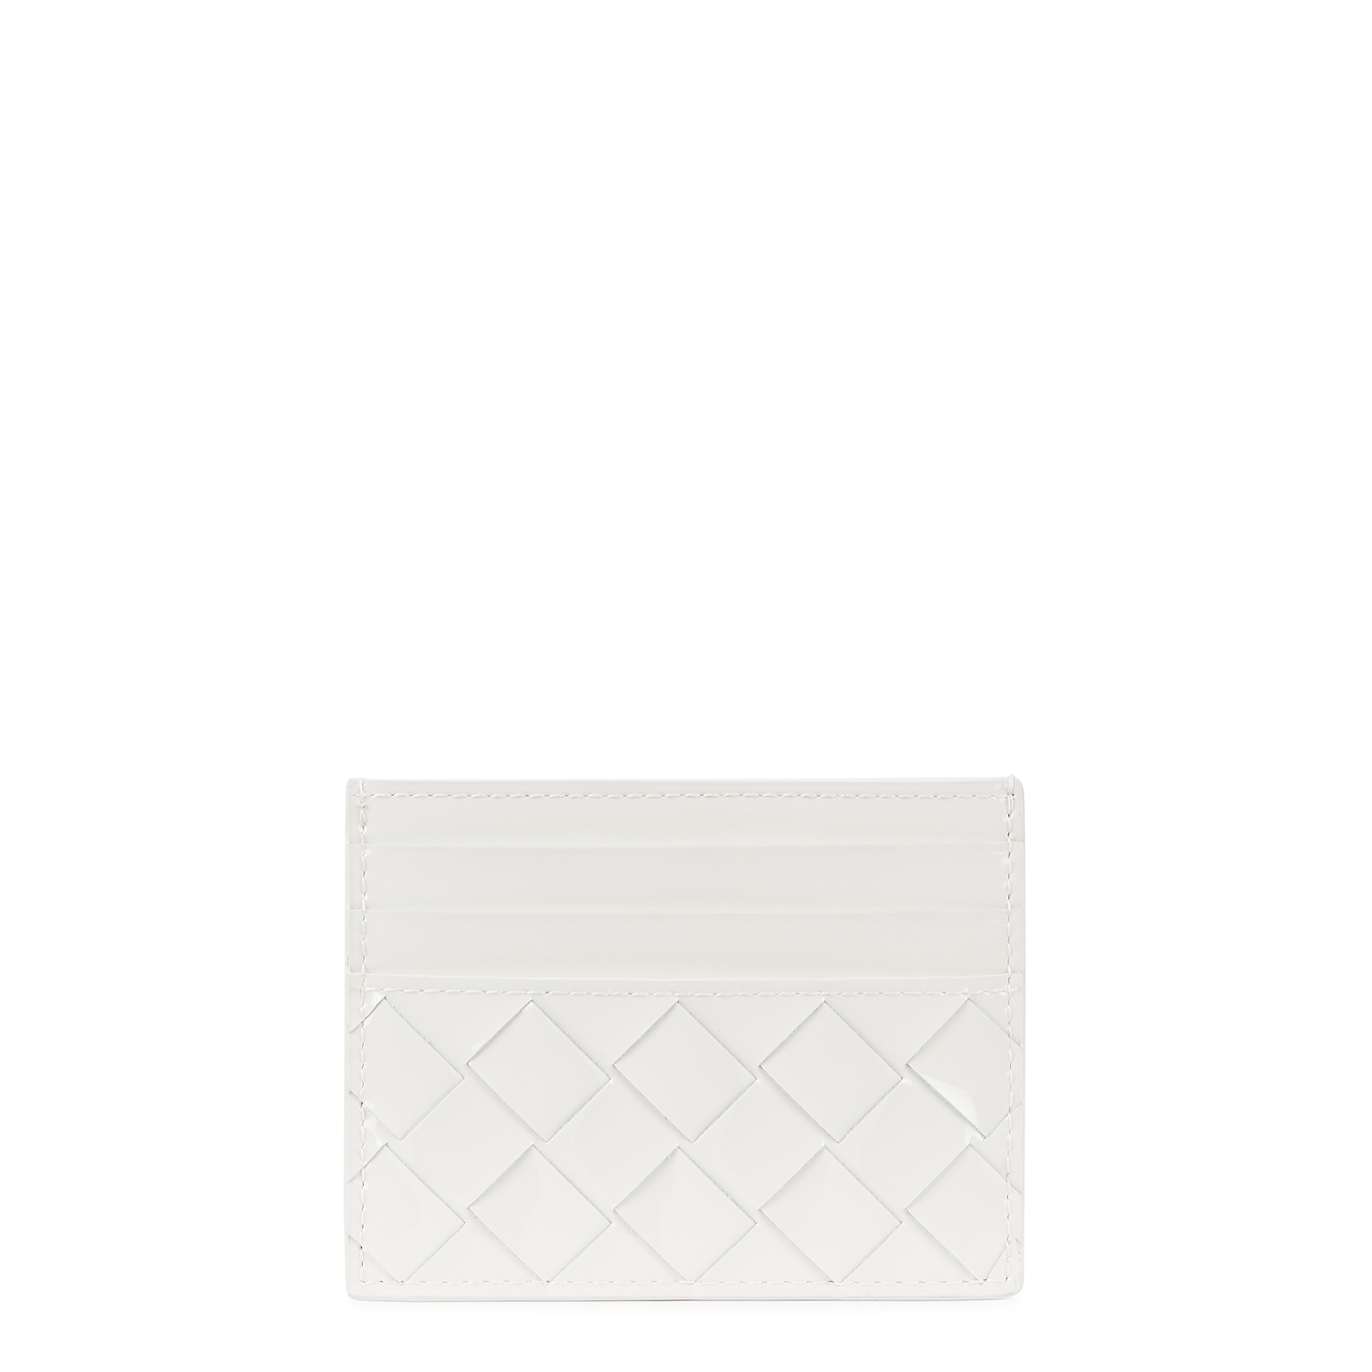 Bottega Veneta Intrecciato White Patent Leather Card Holder